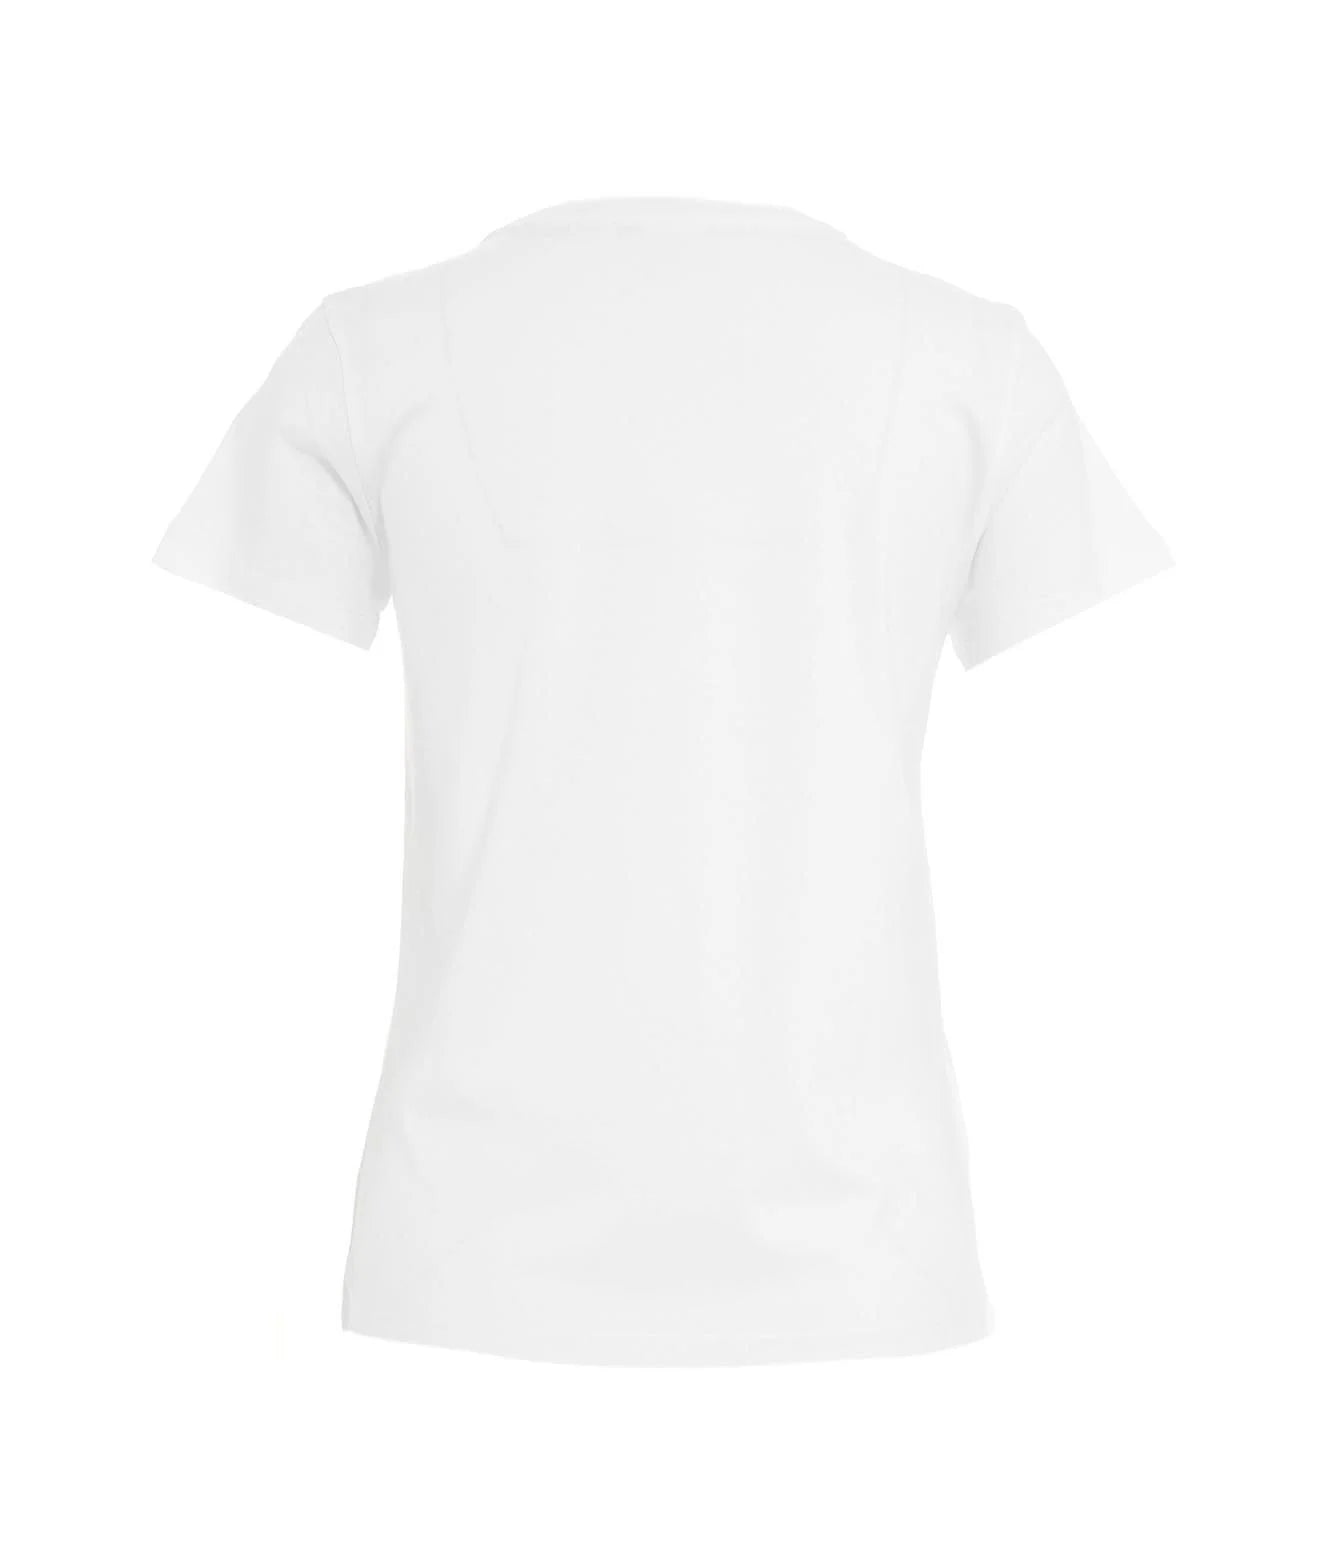 White Bussolotto T-shirt